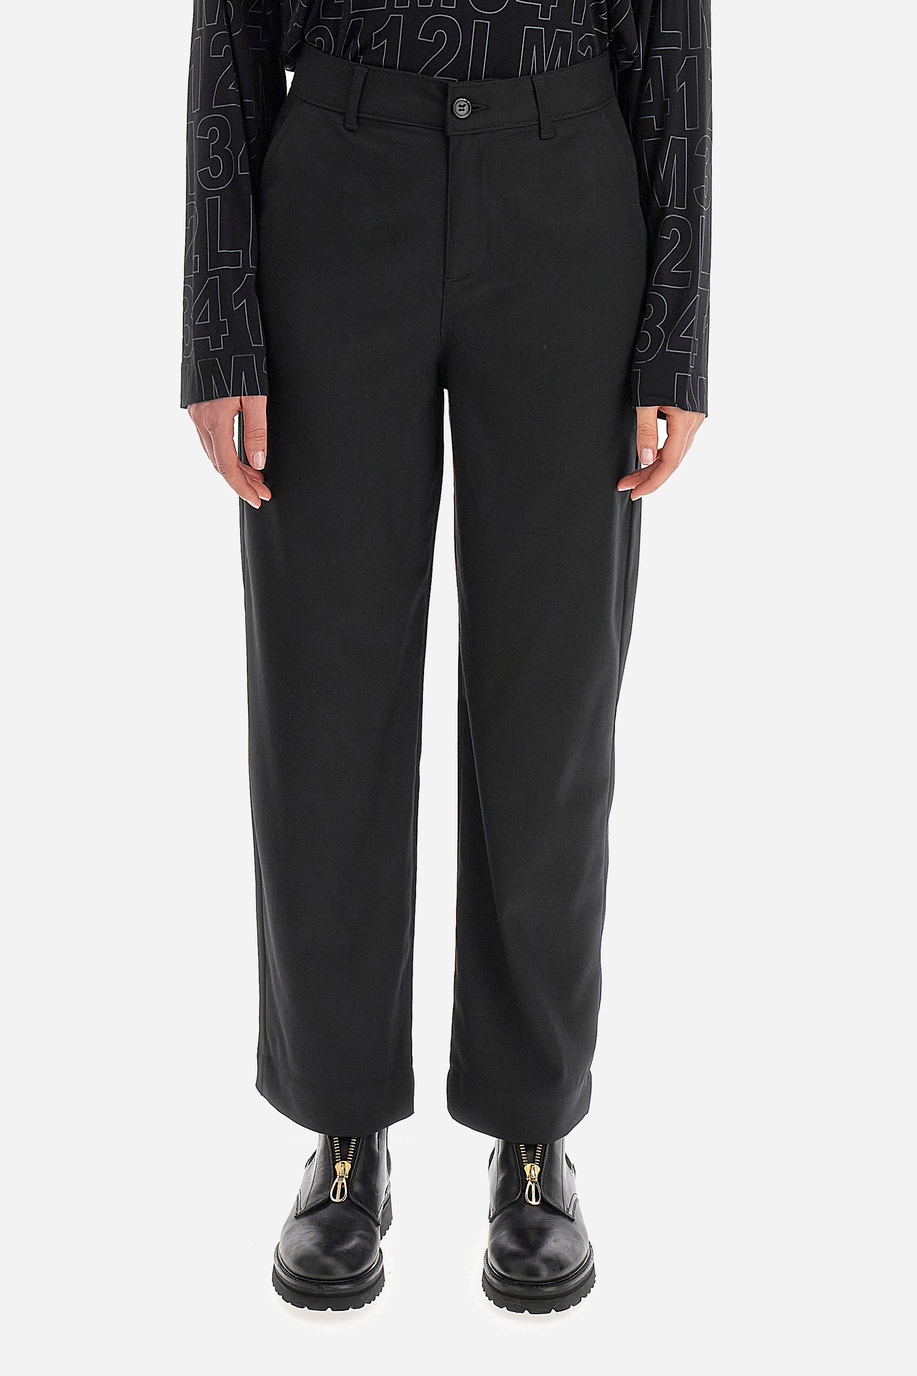 Pantaloni donna regular fit - Wardley - Business Look donna | La Martina - Official Online Shop